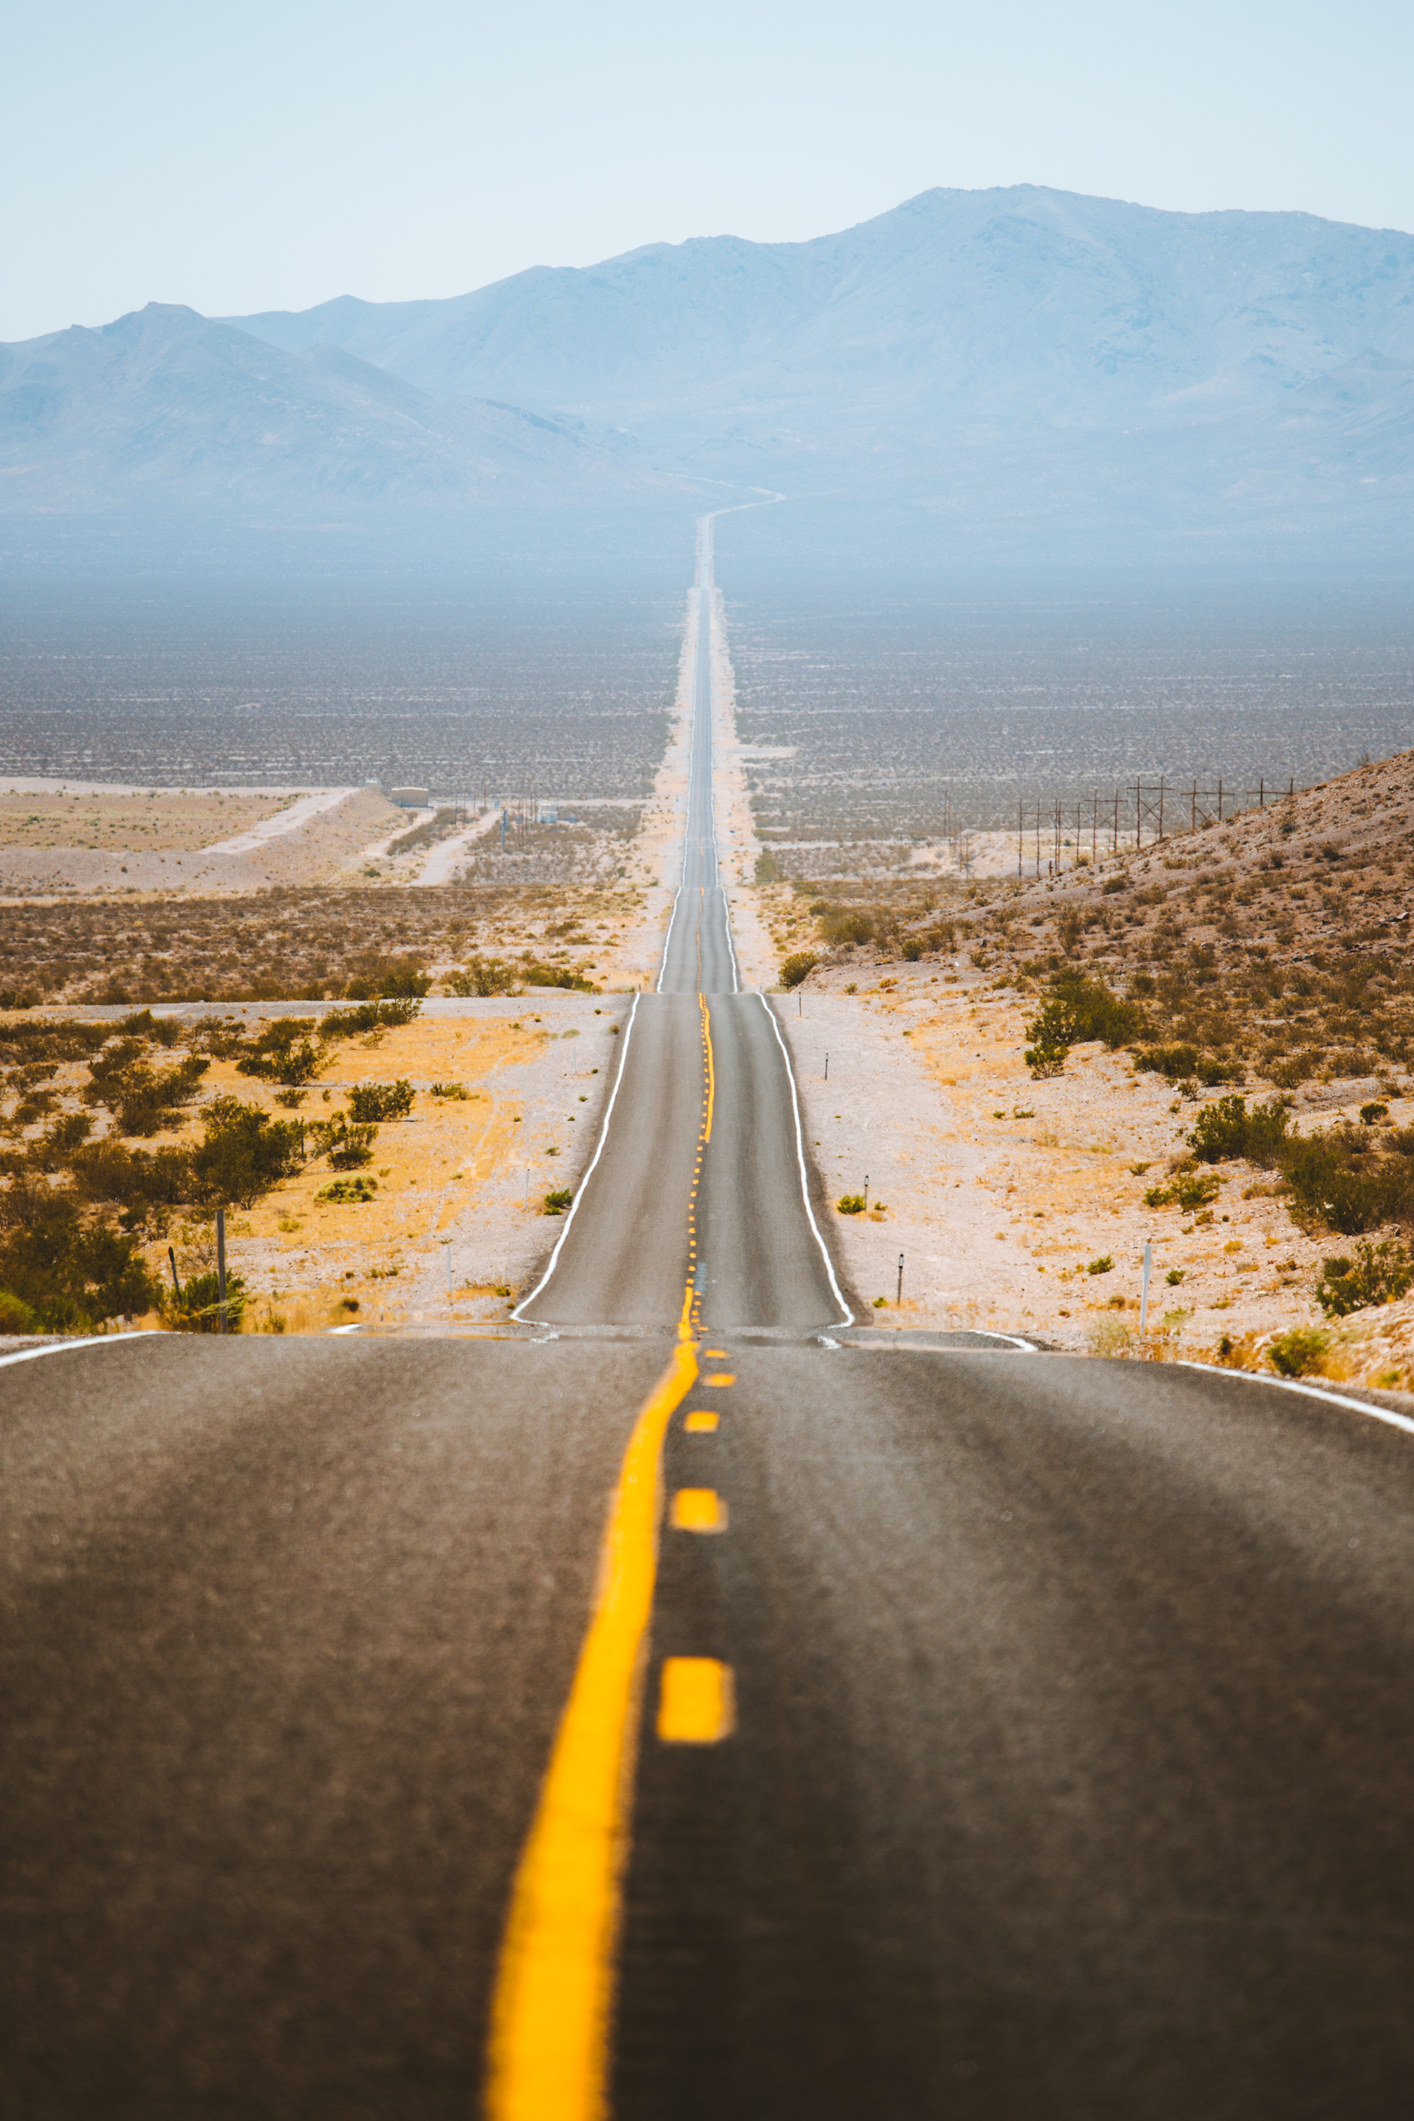 A road leading through desert